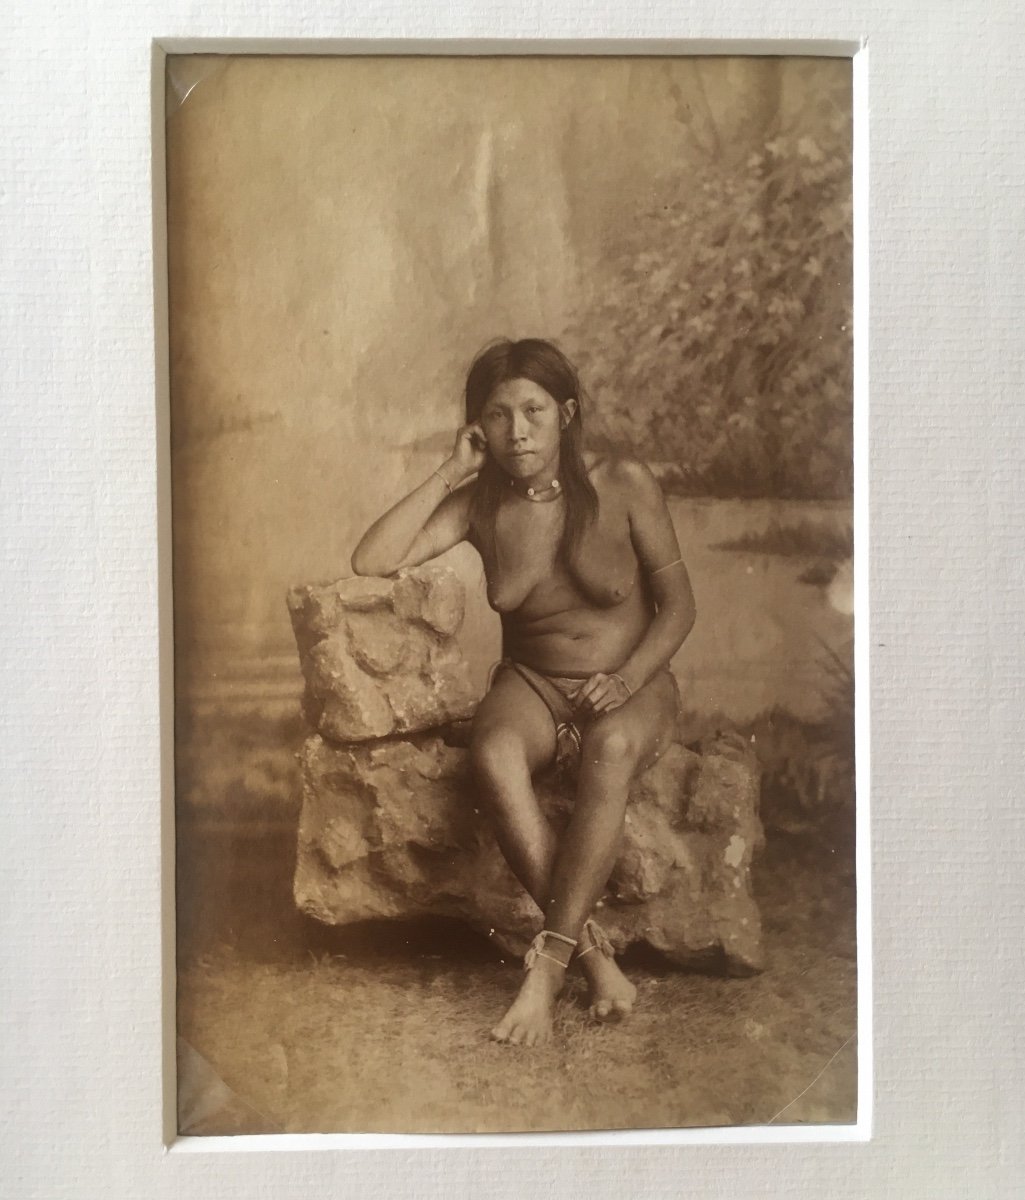 Albumen Print. South American Indian Woman, Guyana. Nineteenth Century